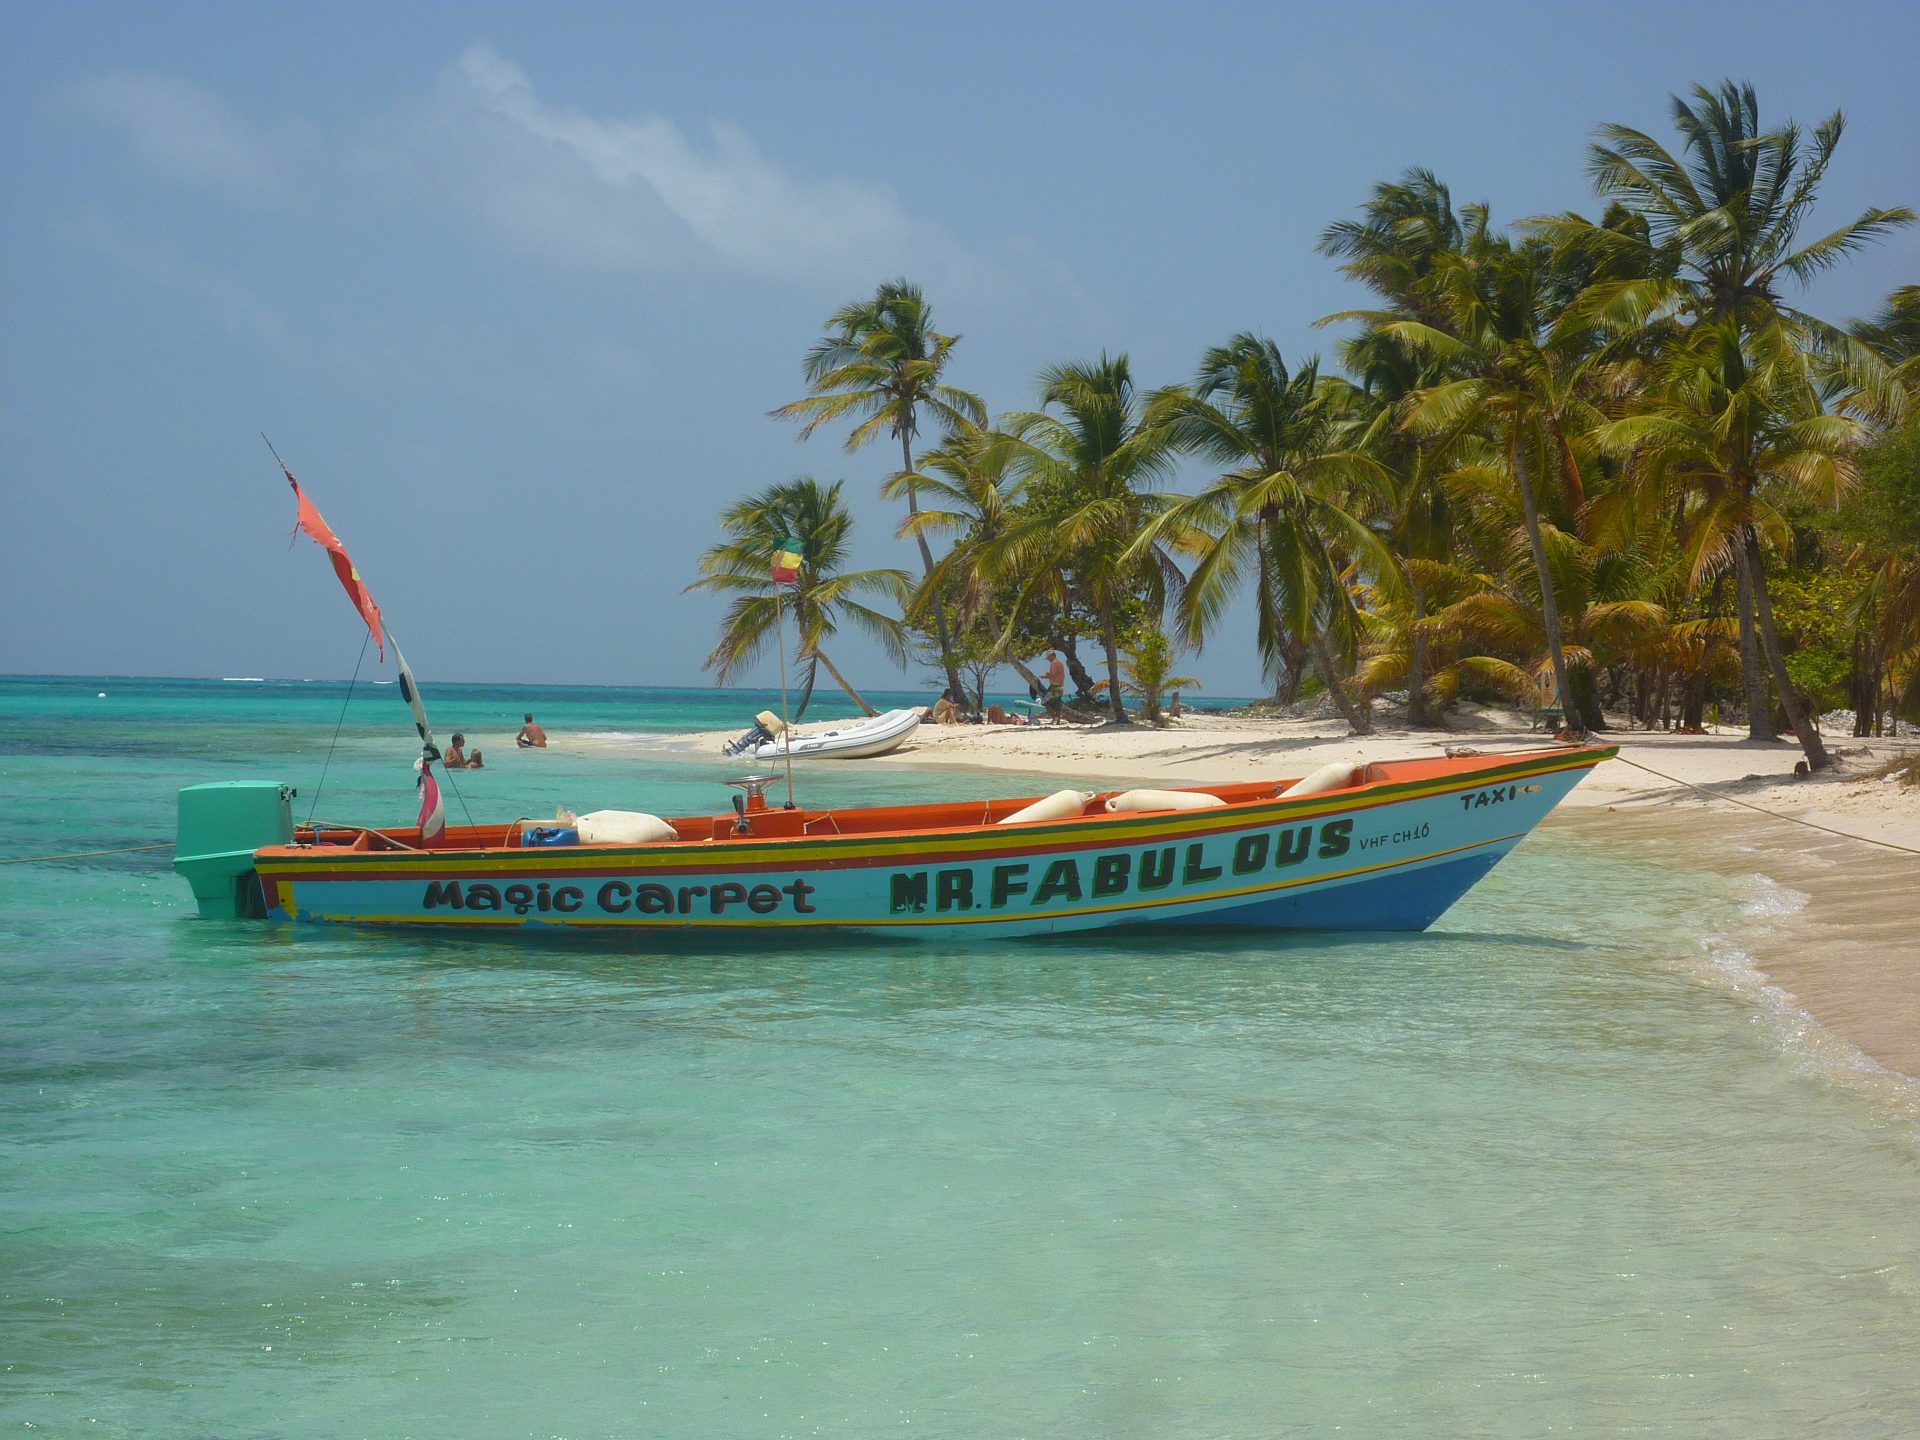 Mr Fabulous boat on Caribbean beach